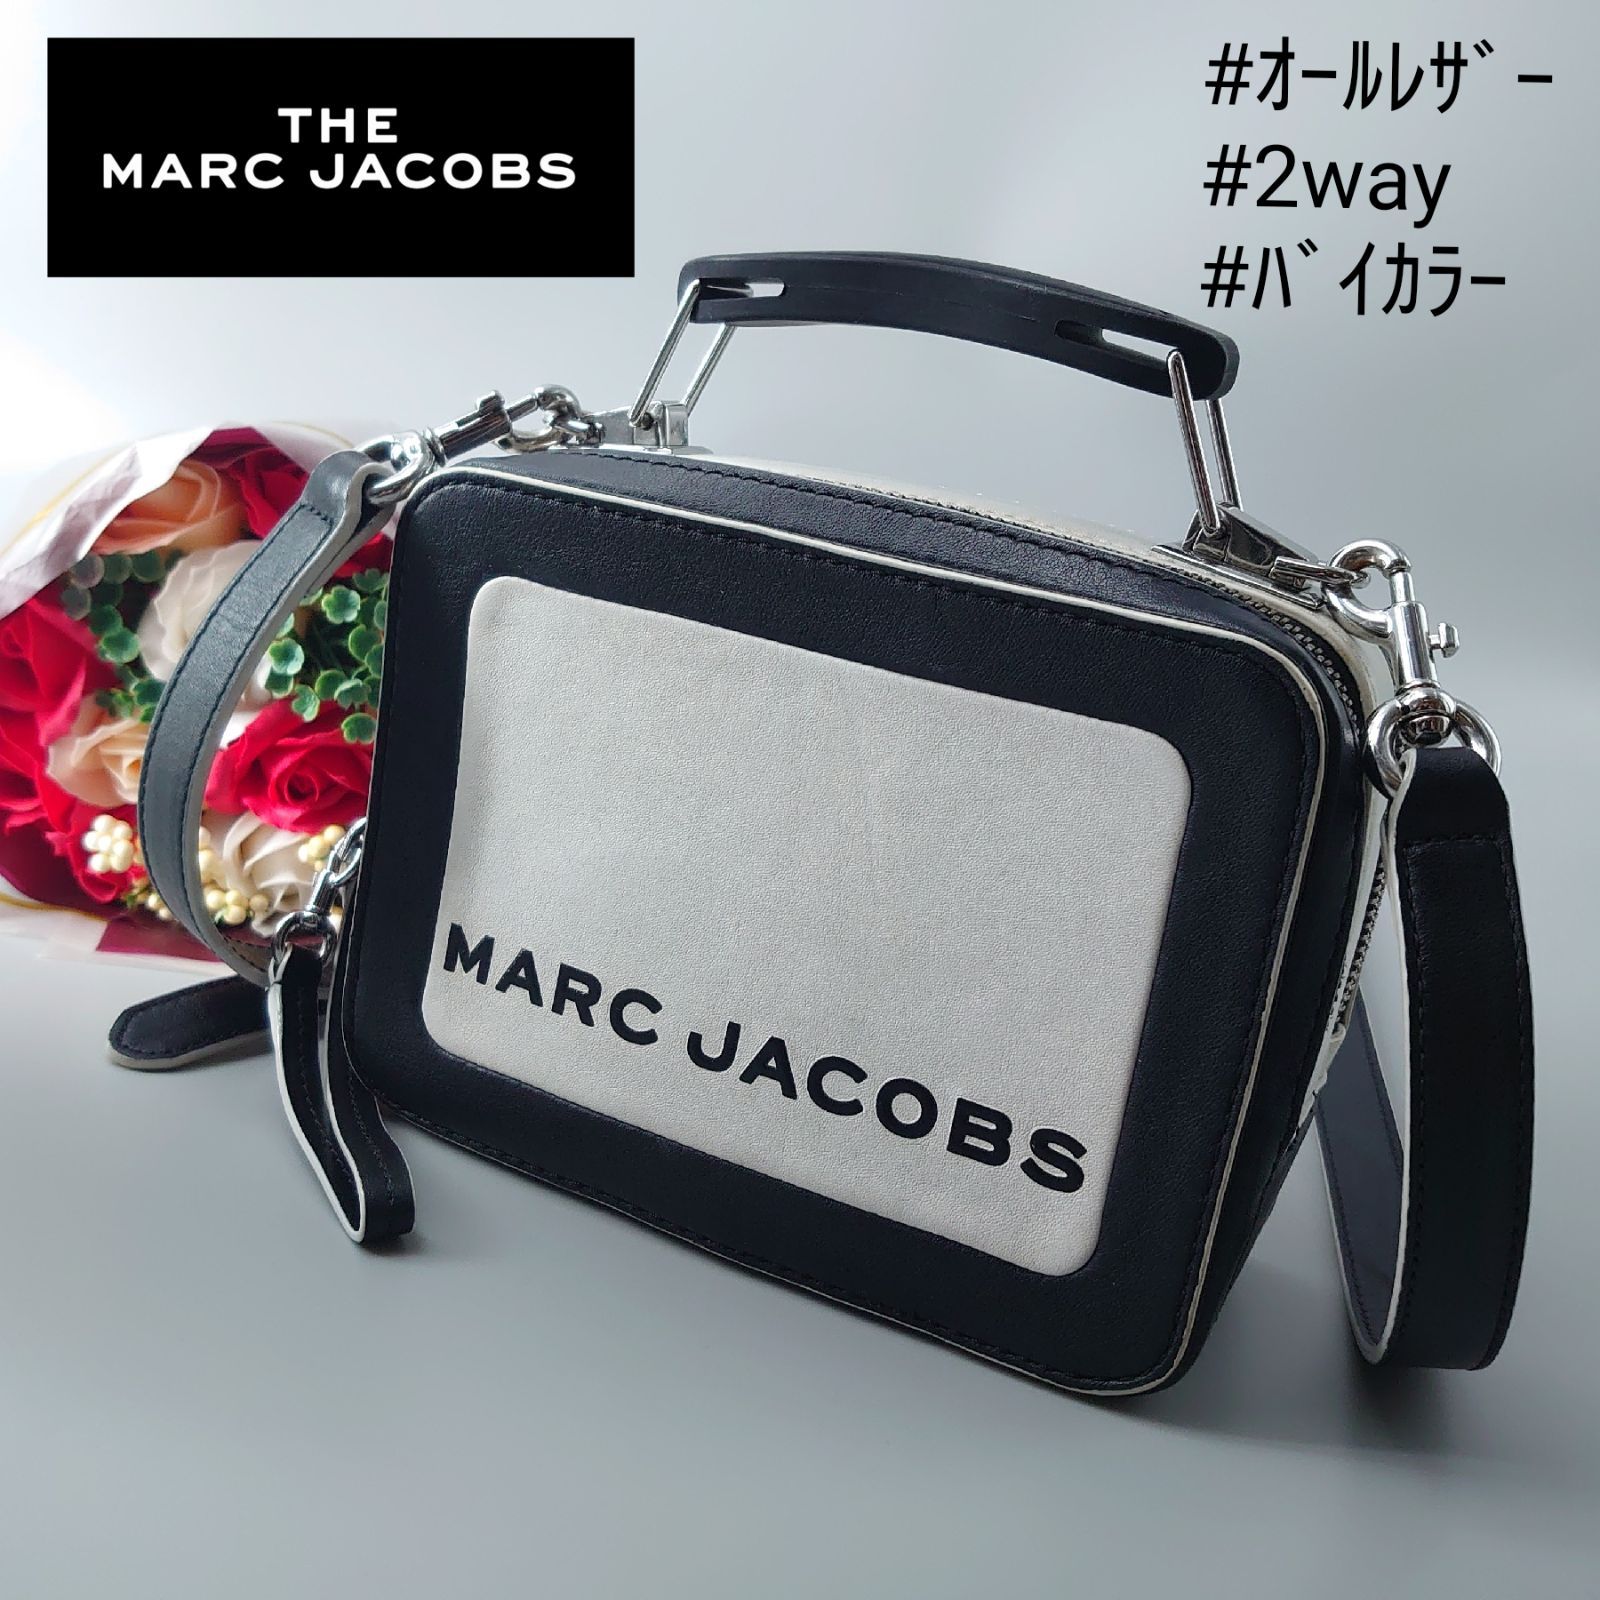 MARC JACOBS THE BOX 20 ショルダーバッグ 2way | www ...